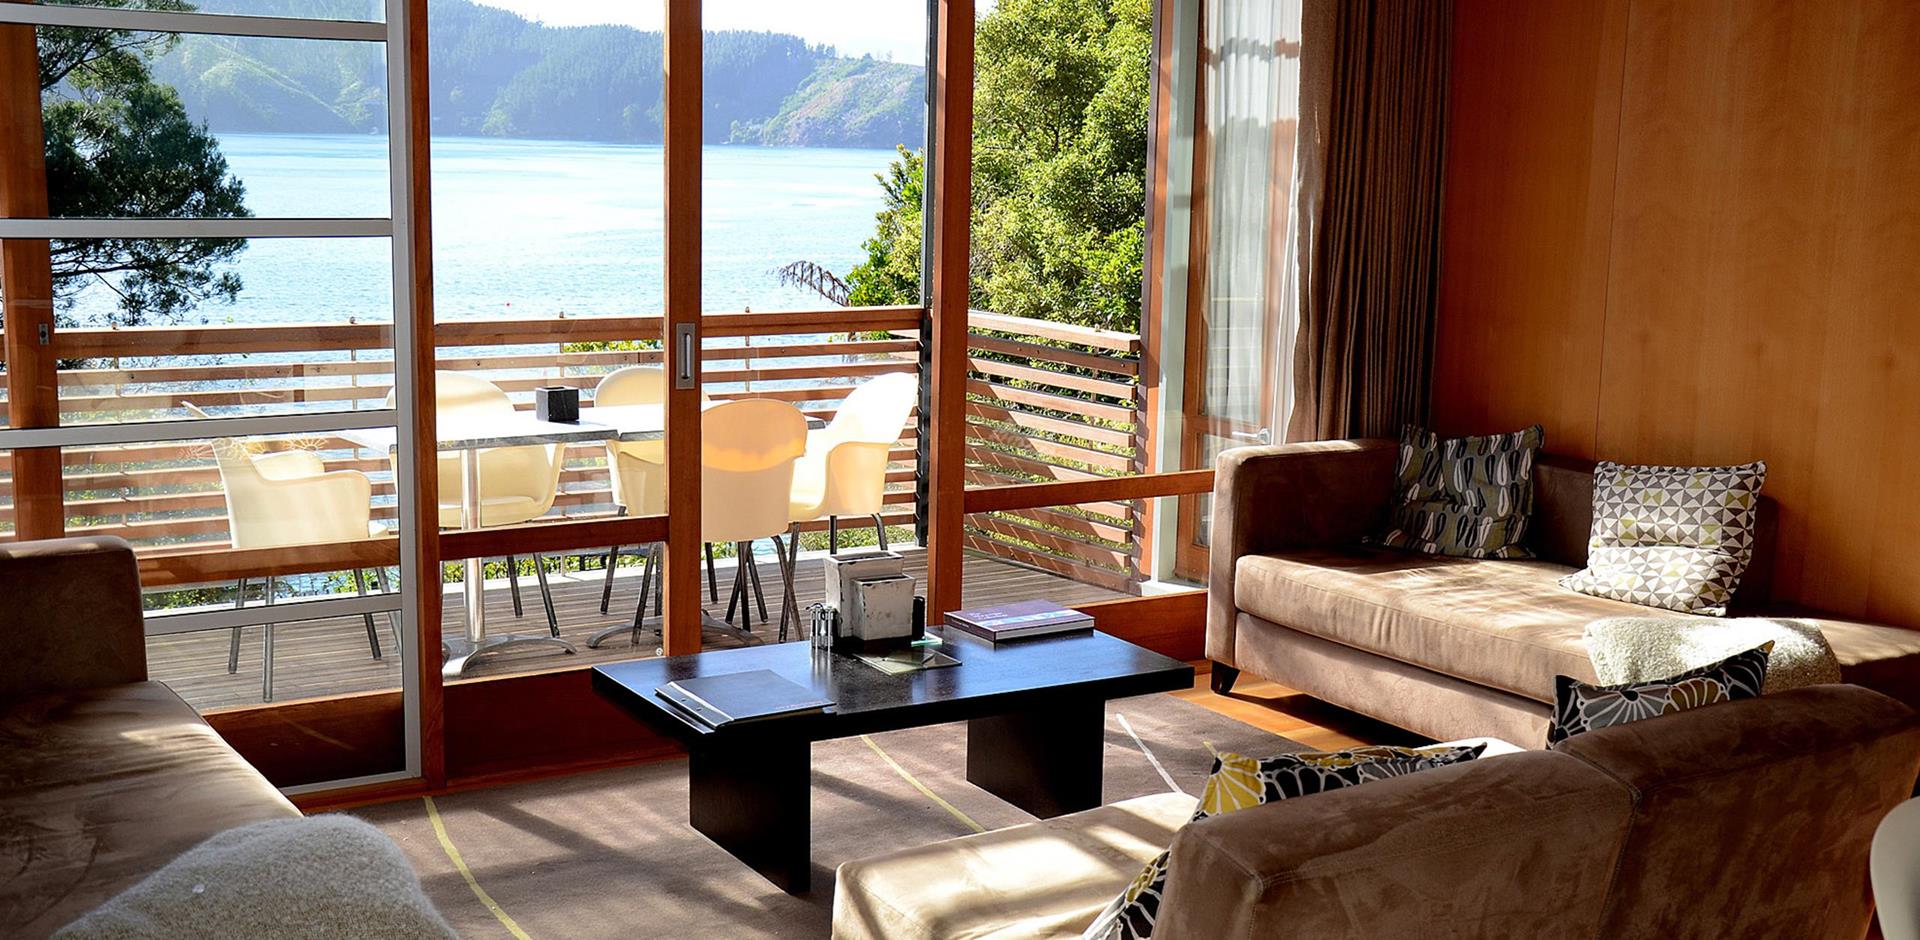 Lounge and balcony, Bay of Many Coves, New Zealand